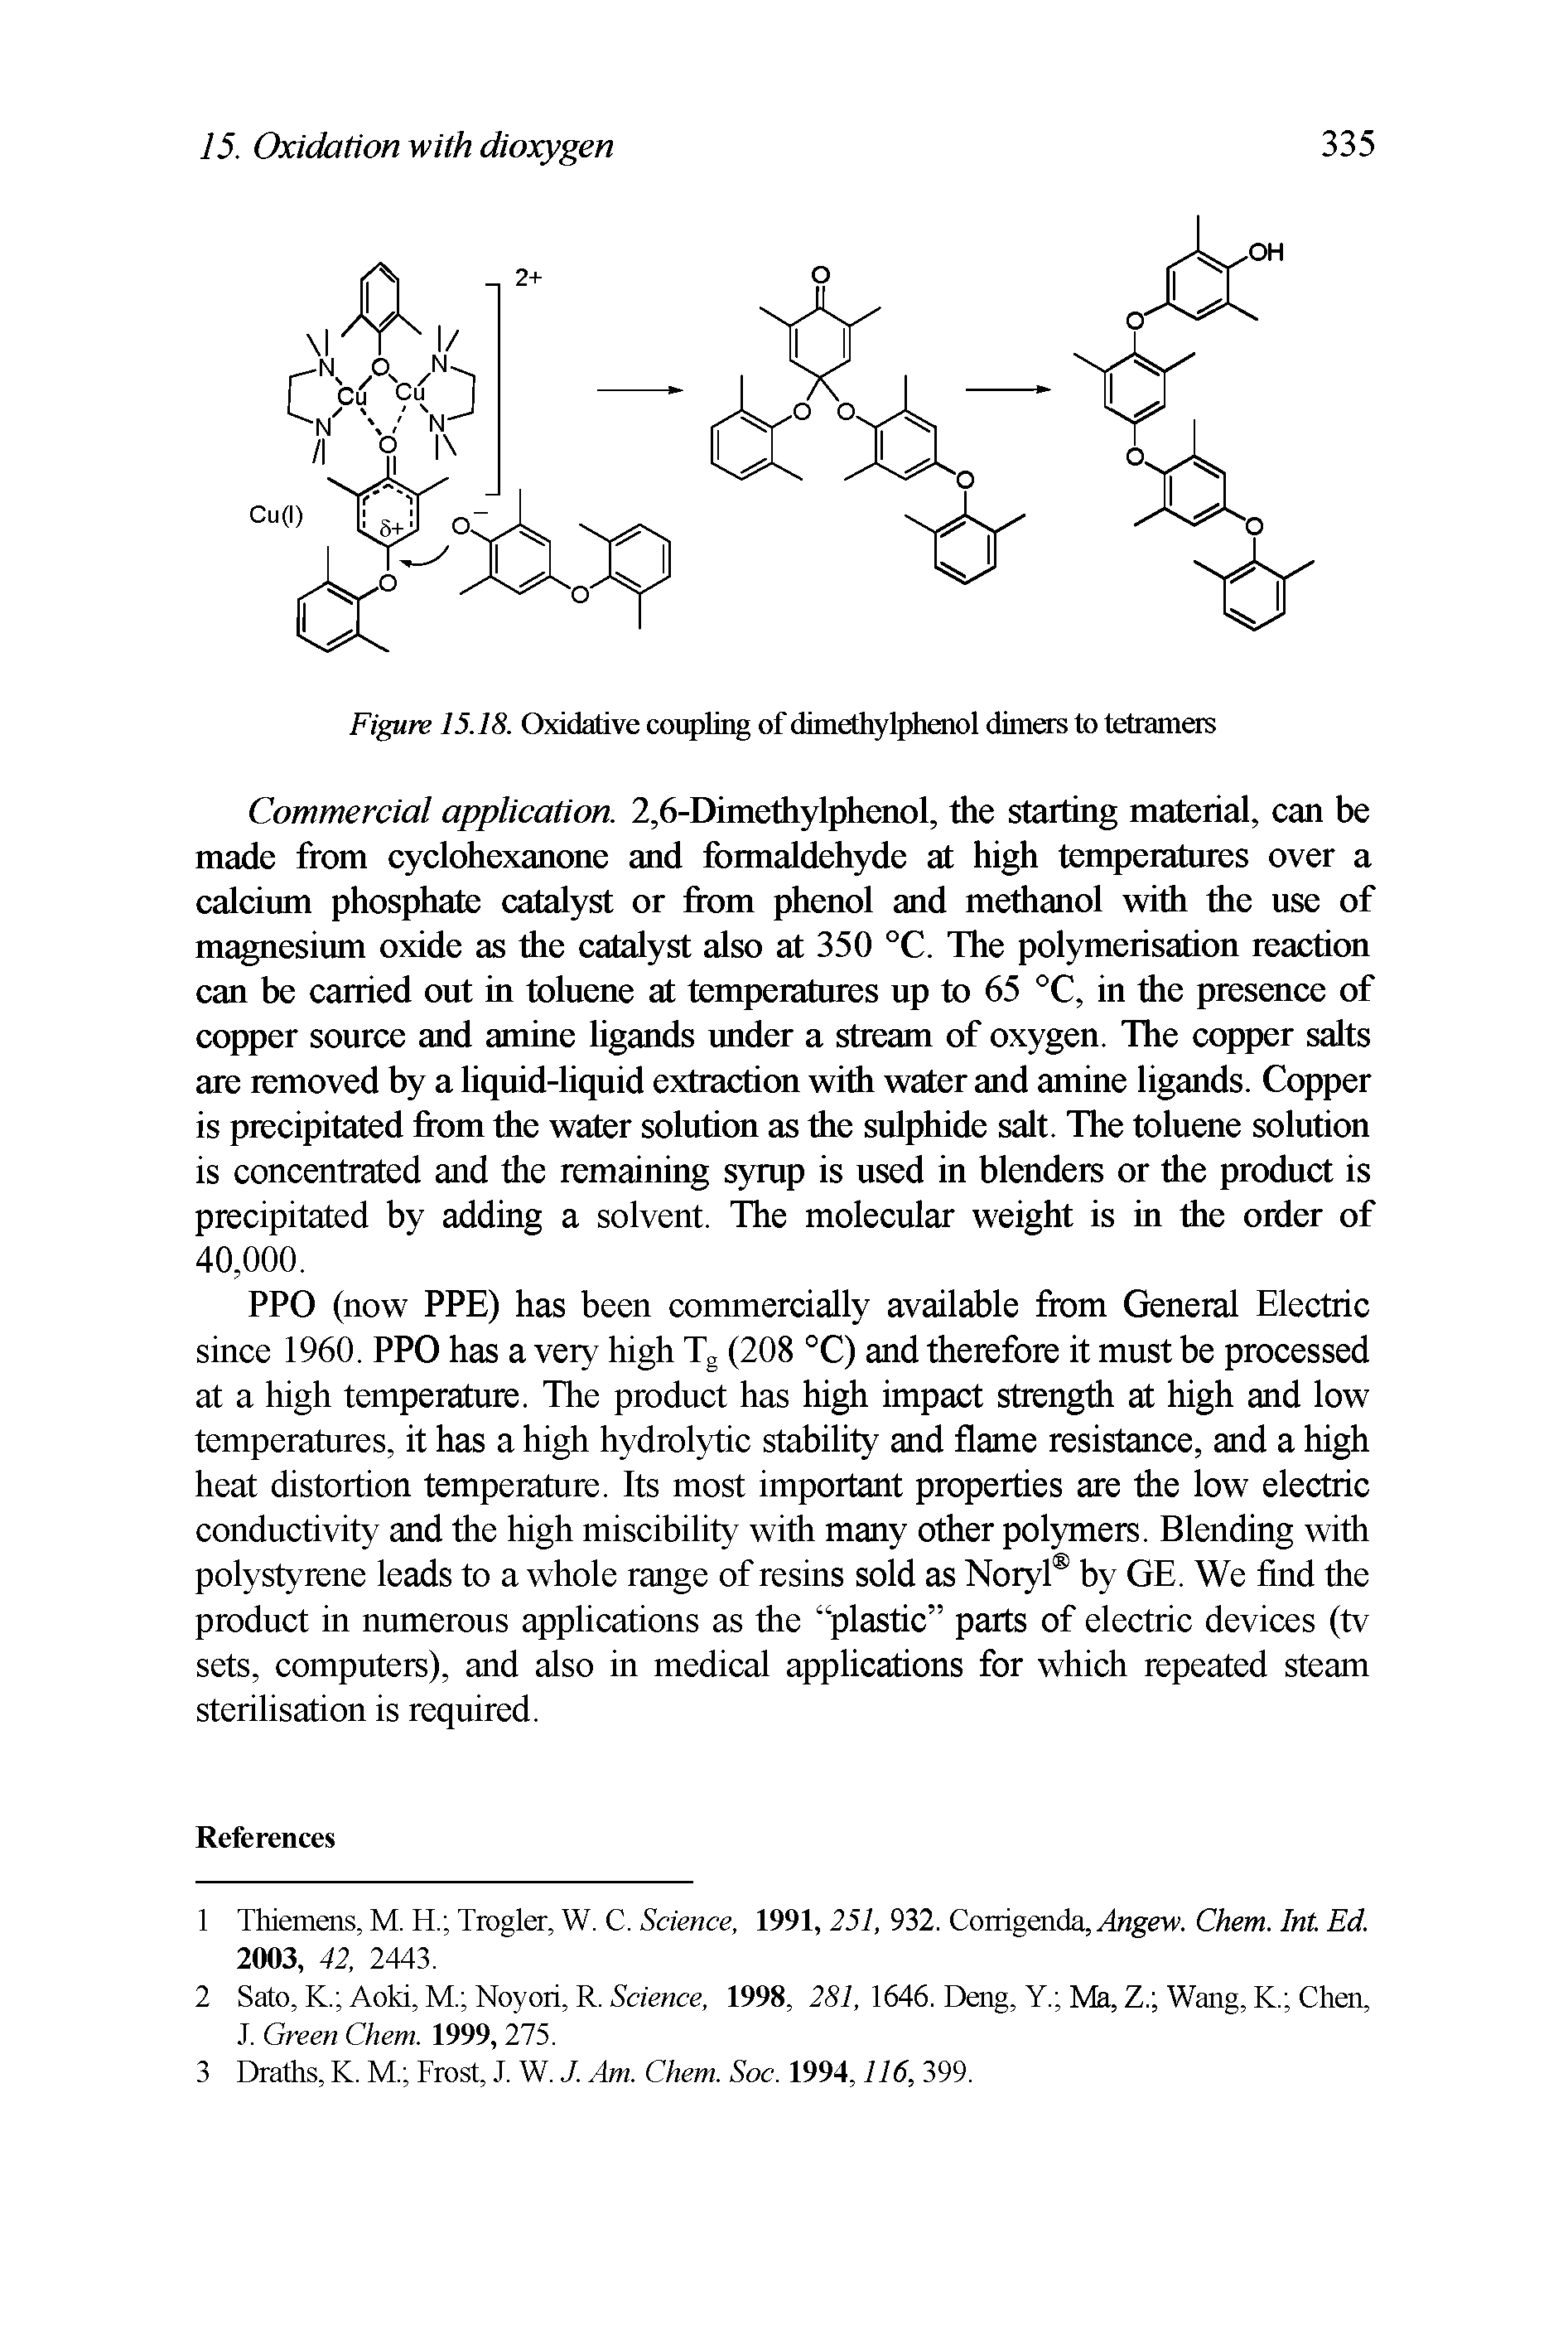 Figure 15.18. Oxidative coupling of dimethylphenol dimers to tetramers...